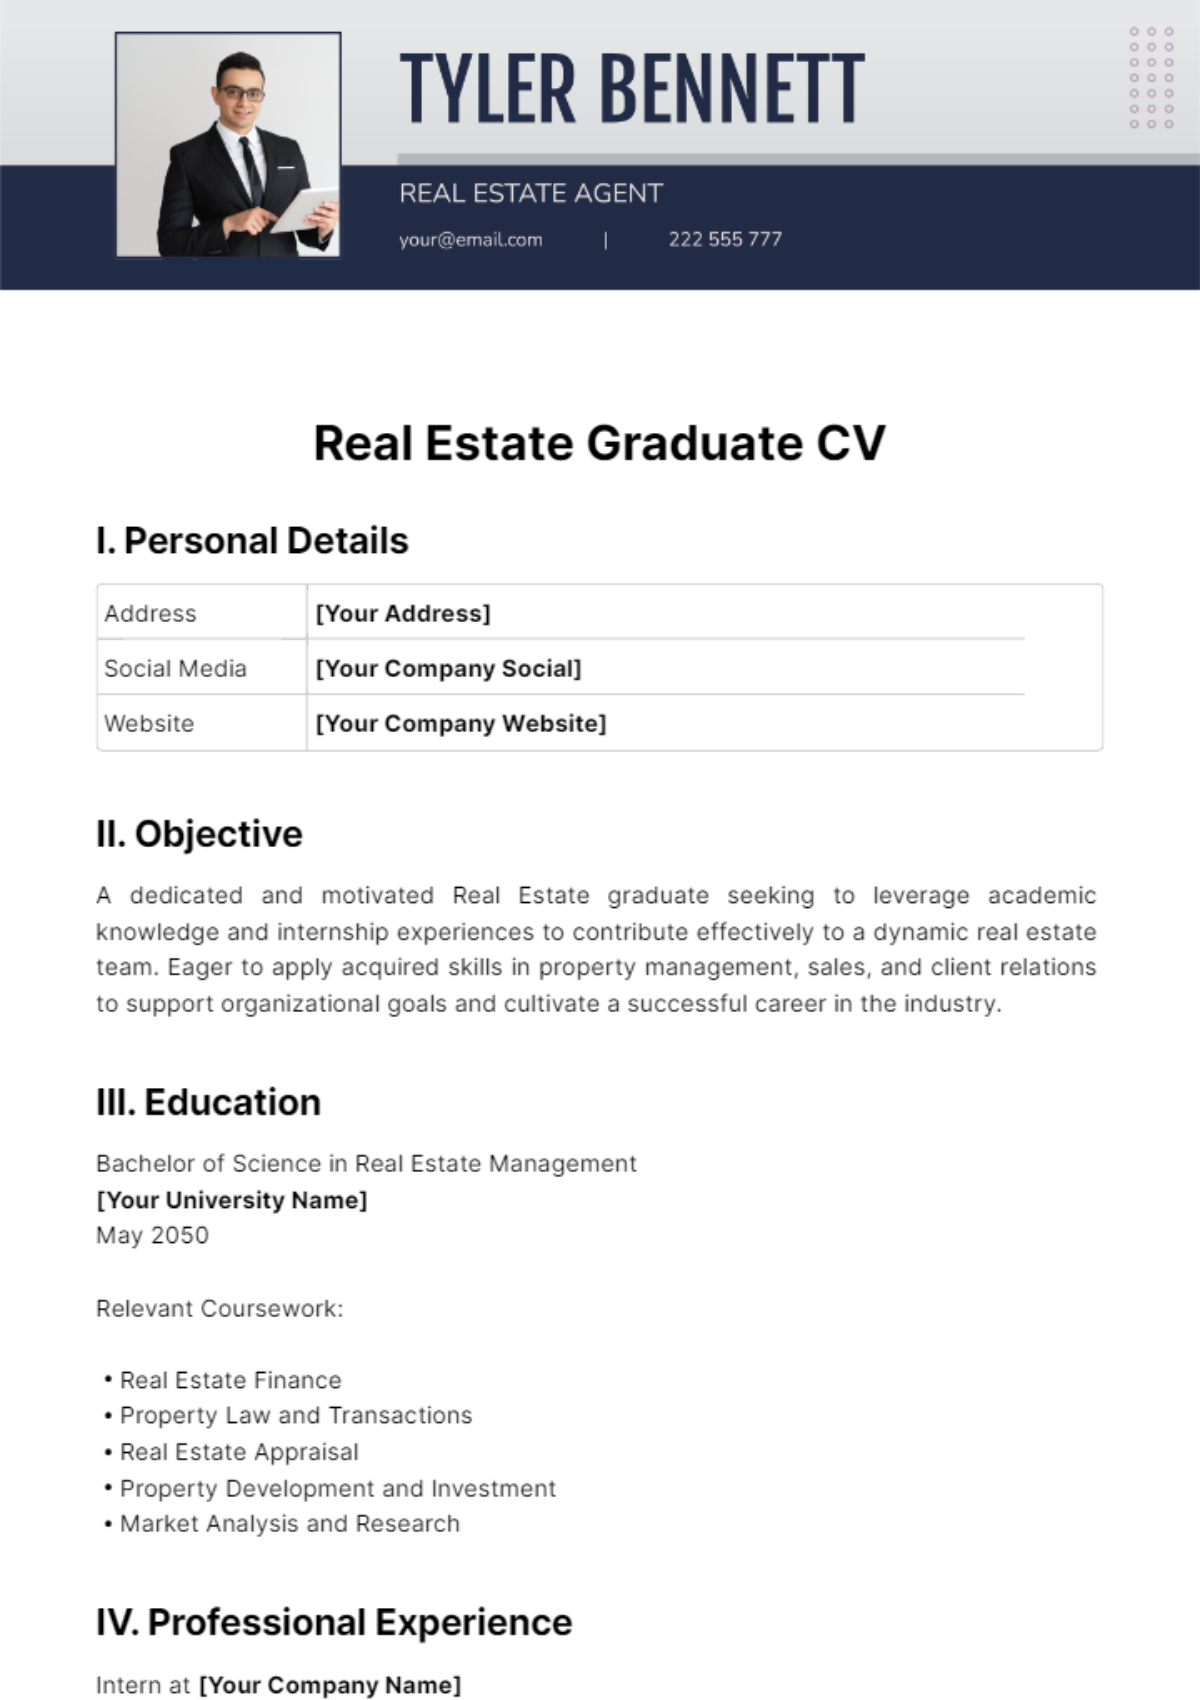 Real Estate Graduate CV Template